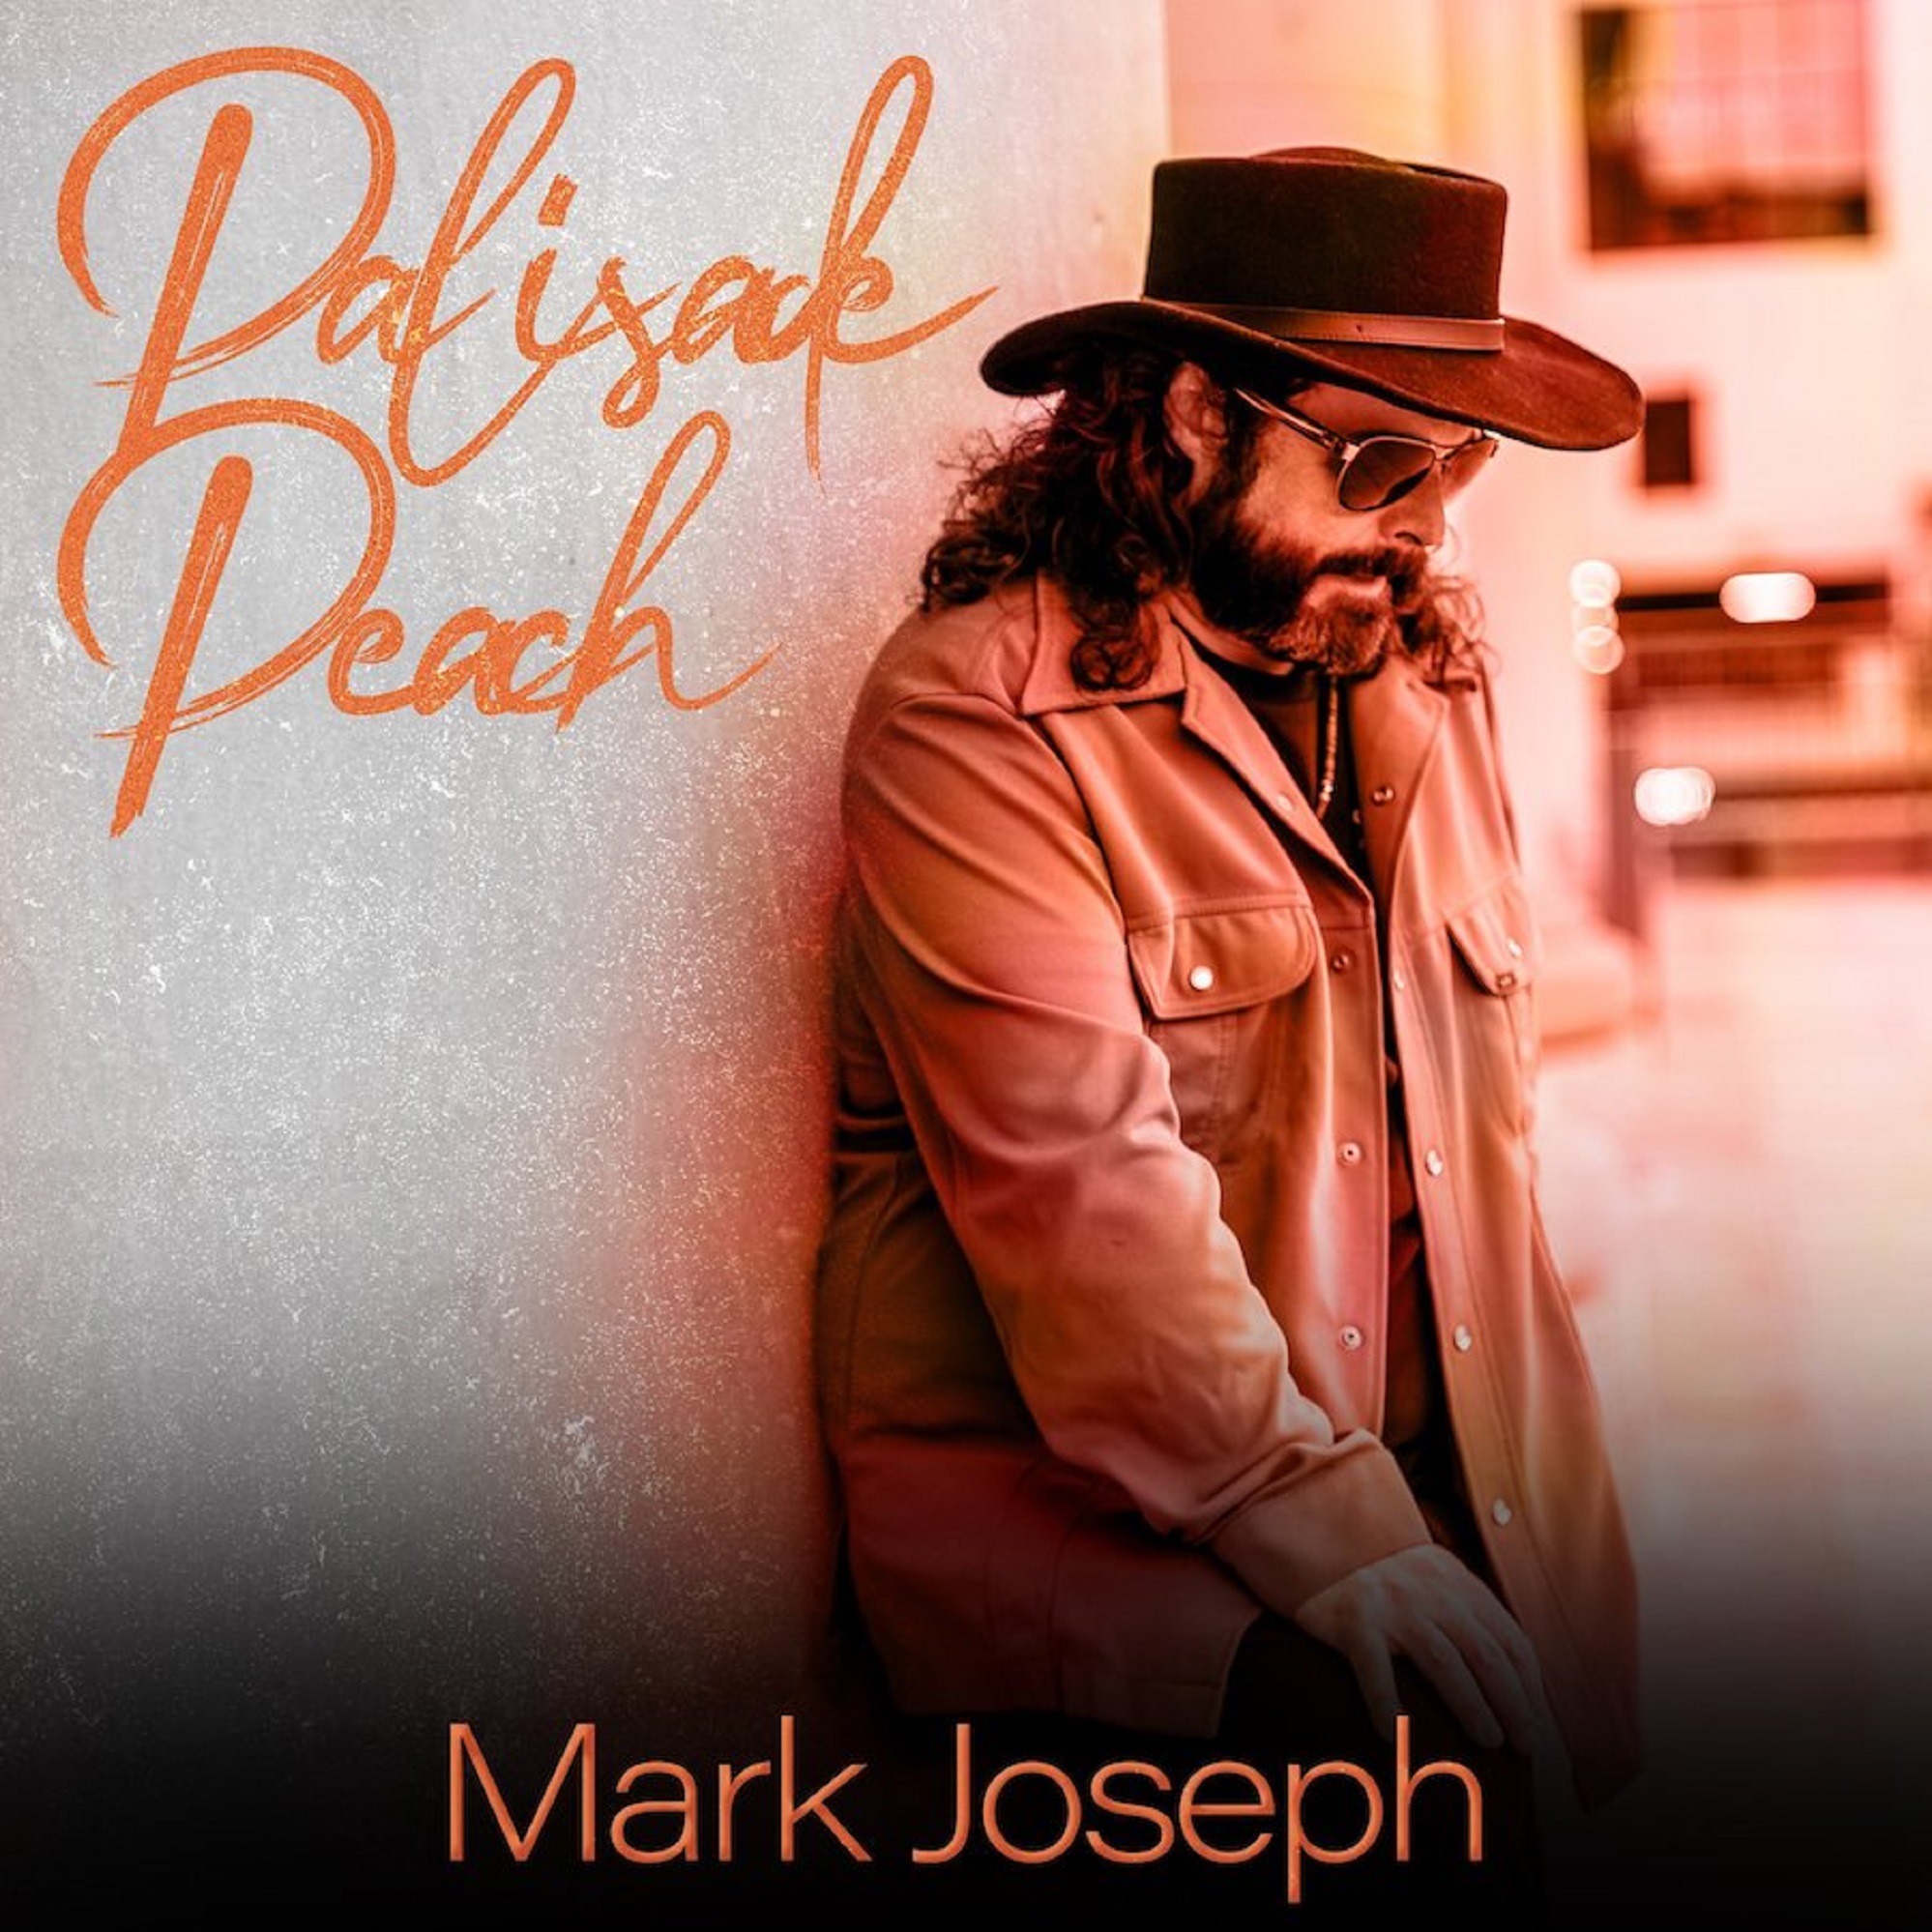 Mark Joseph Unveils "Palisade Peach": A Soulful Journey Through Americana